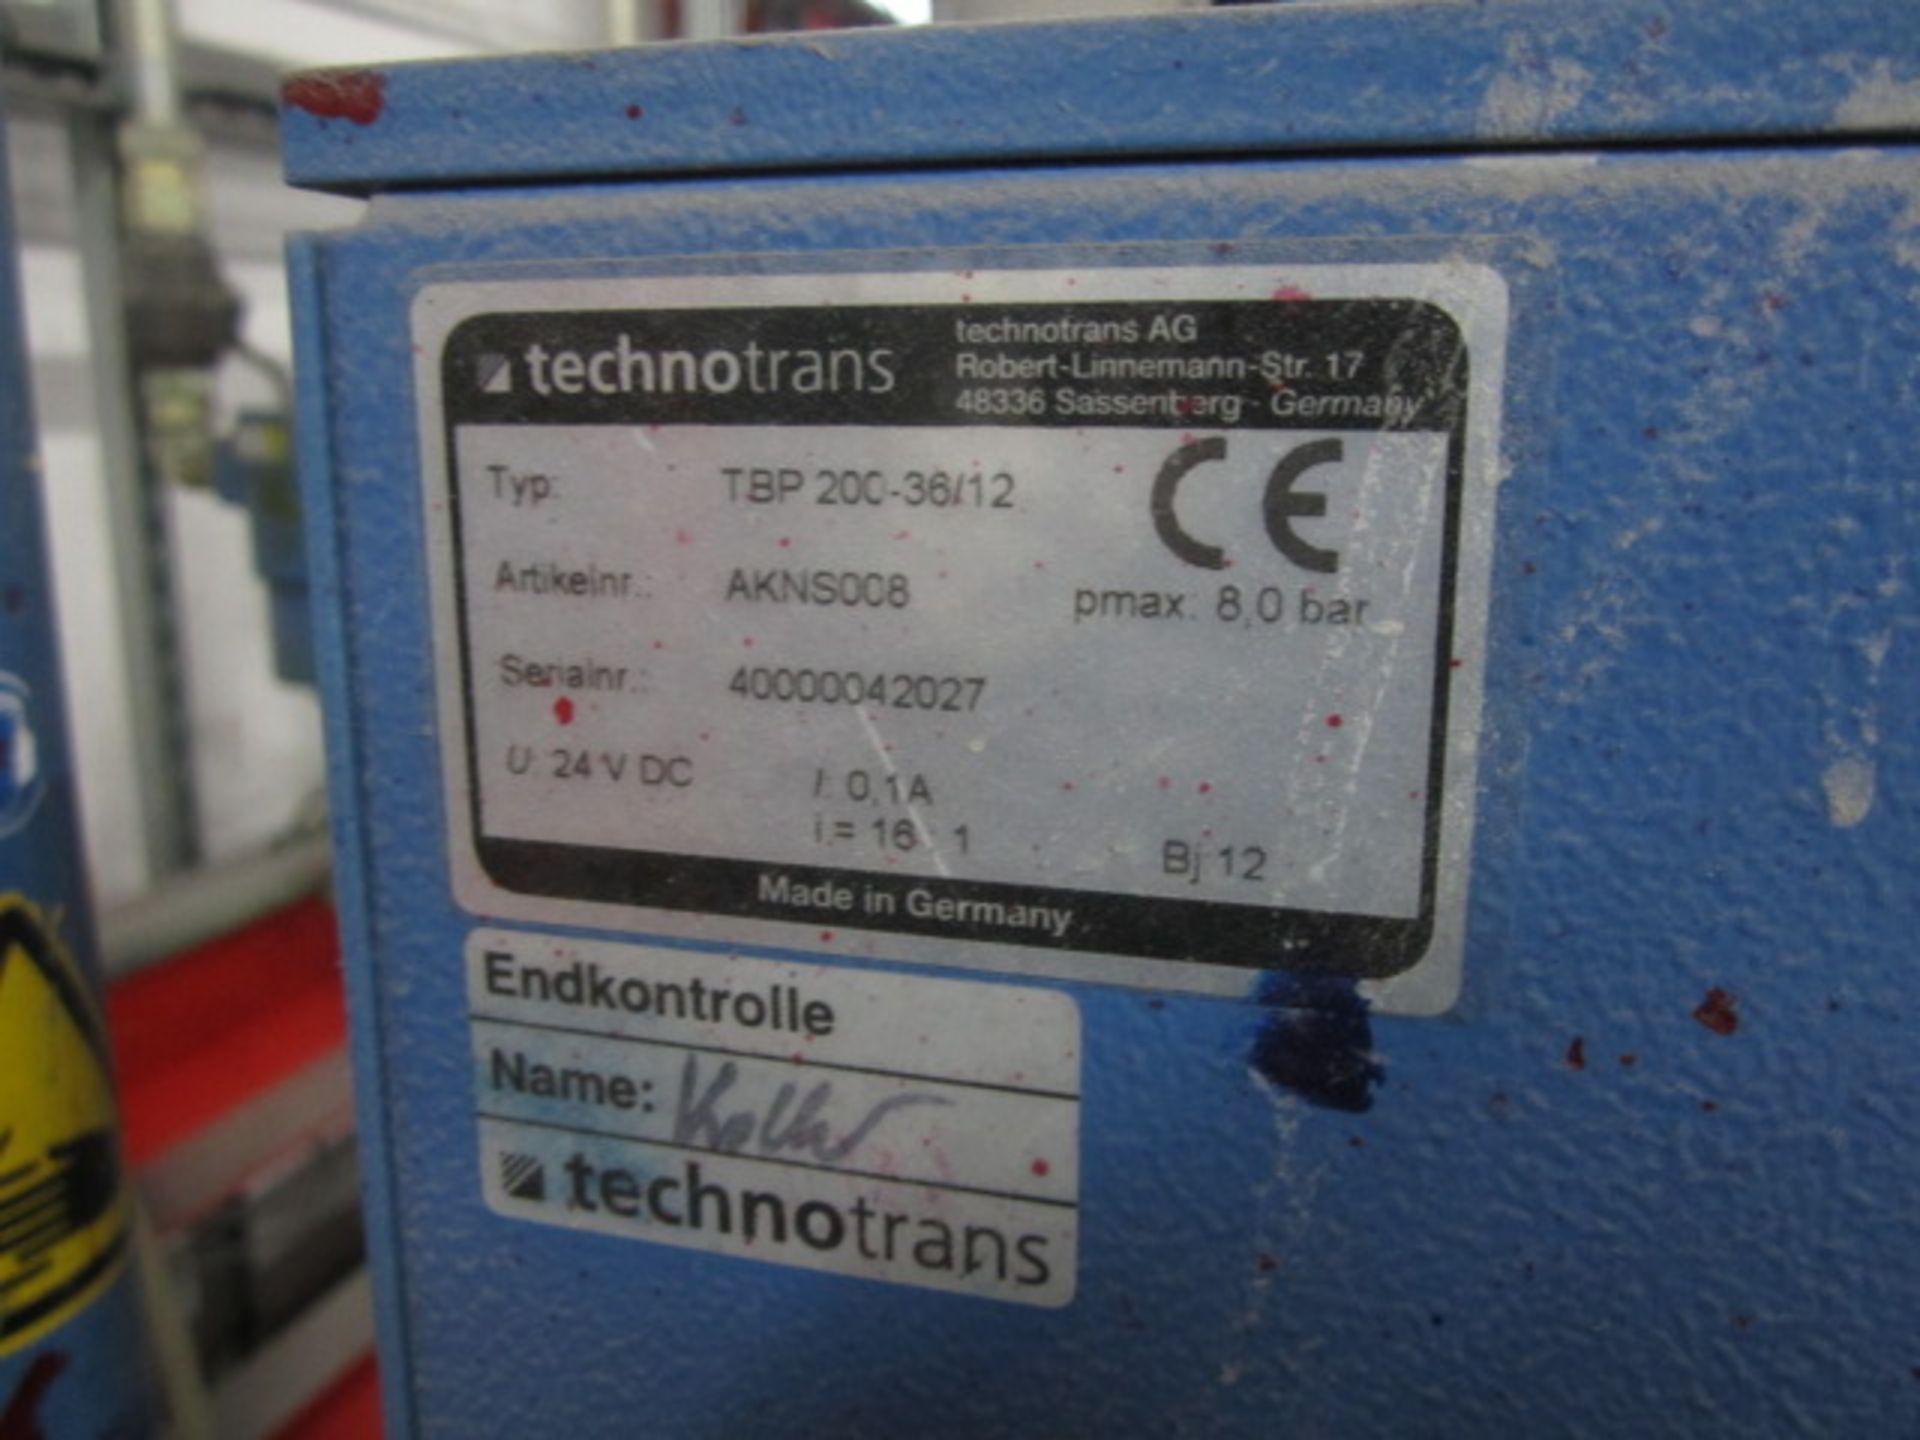 Technotrans TBP200-36/12 ink pump (2012), serial no. 40000042027 - Bild 3 aus 3